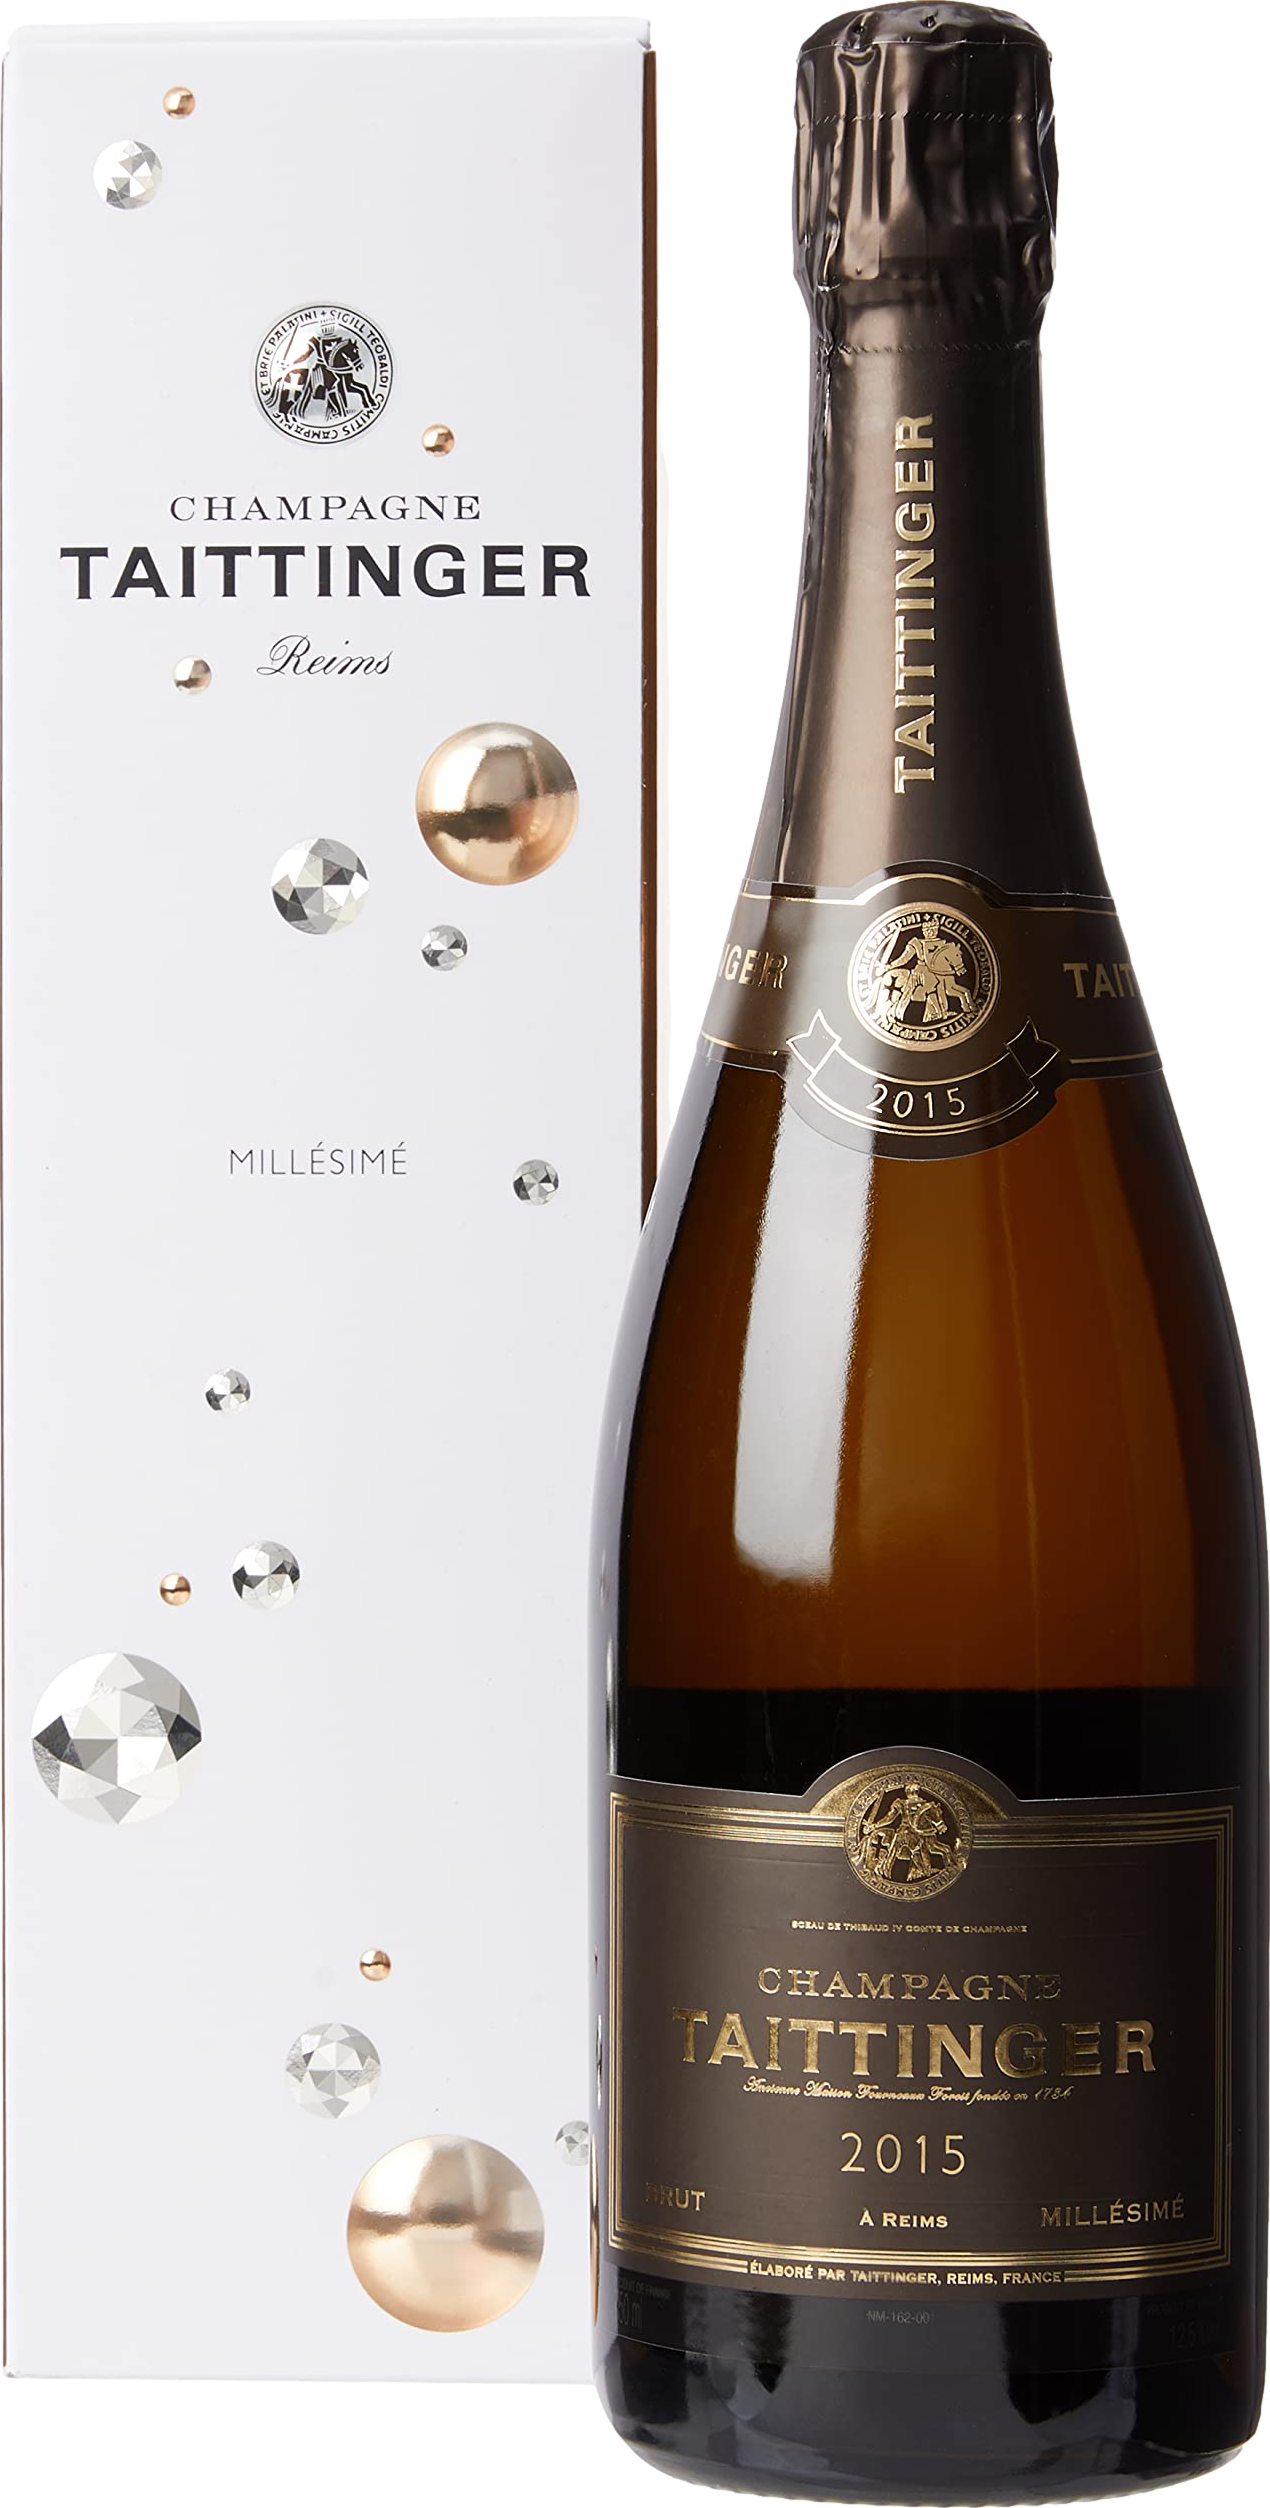 Champagne Taittinger Millesime Brut 2015 Champagne Taittinger 8wines DACH